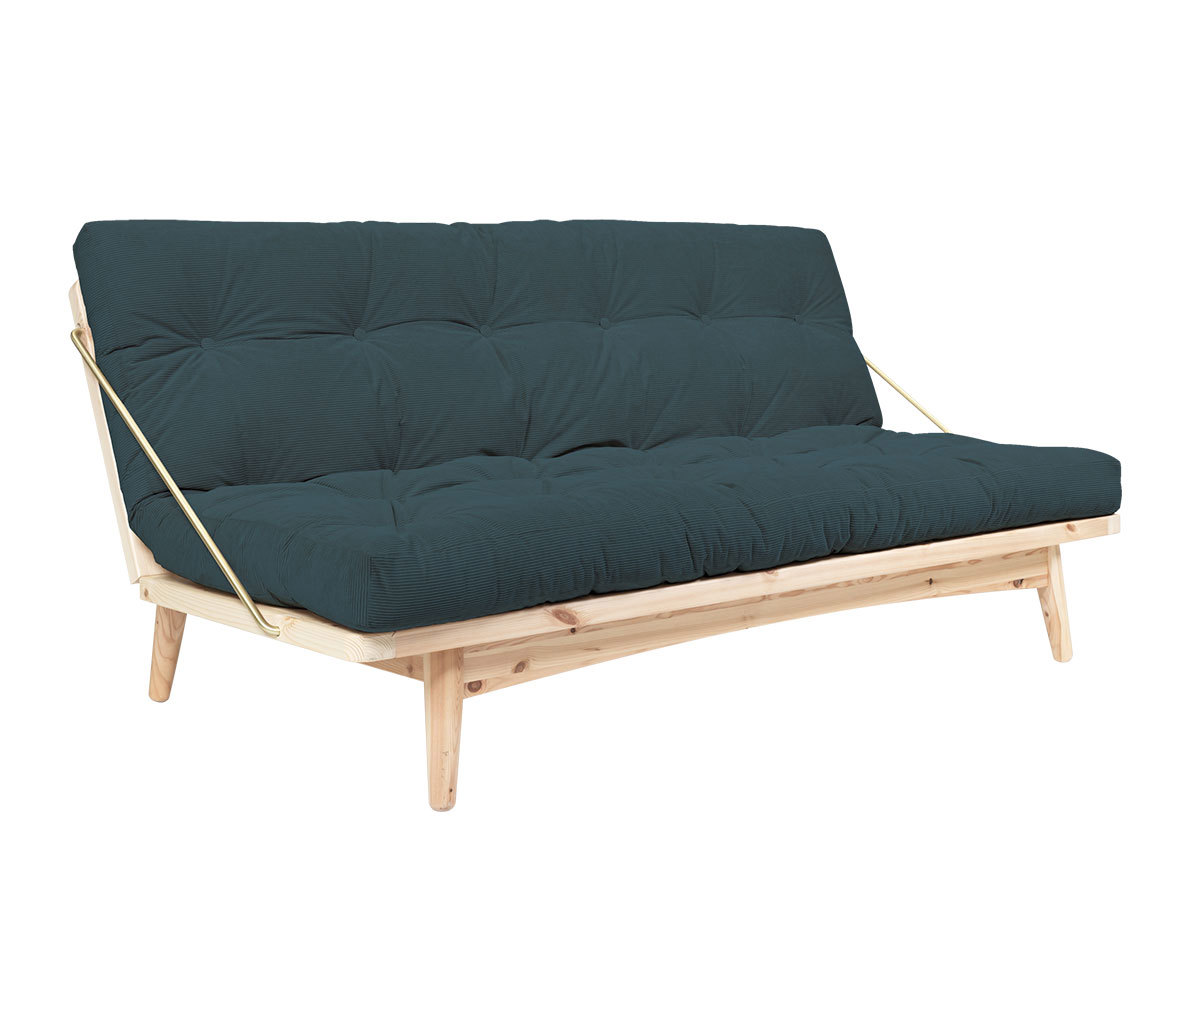 Karup Design Folk-futonsohva pale blue/mänty